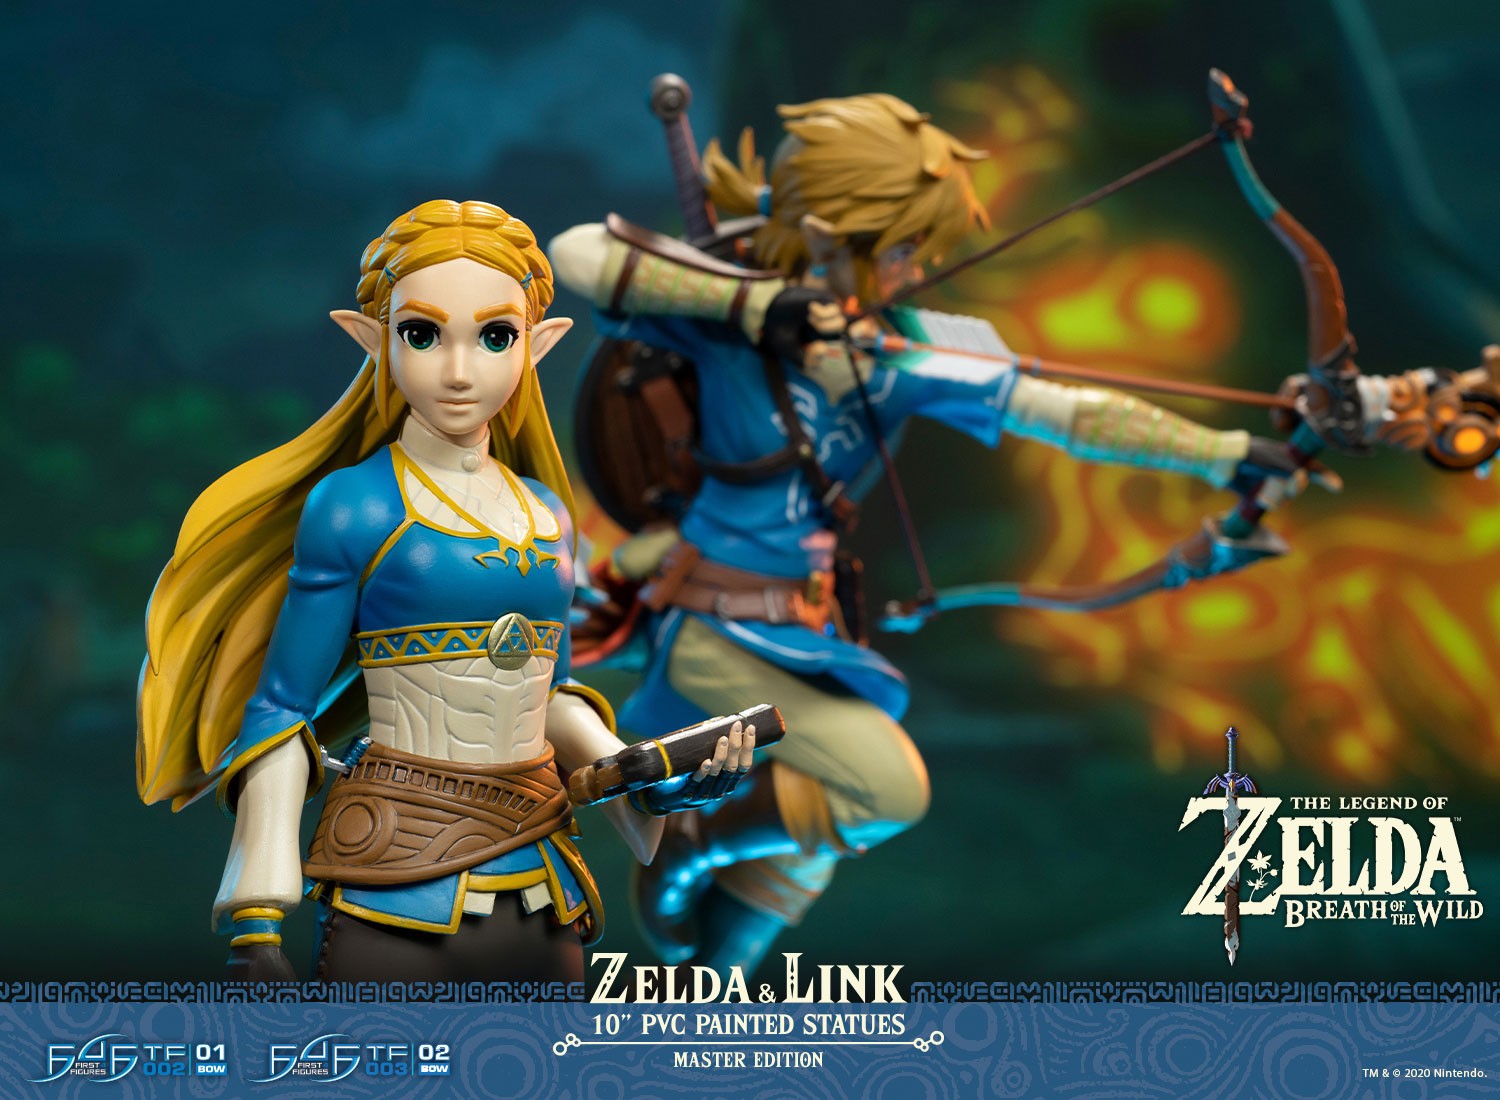 Master Sword The Legend of Zelda Breath of the Wild Link Figurine Statue Toy 